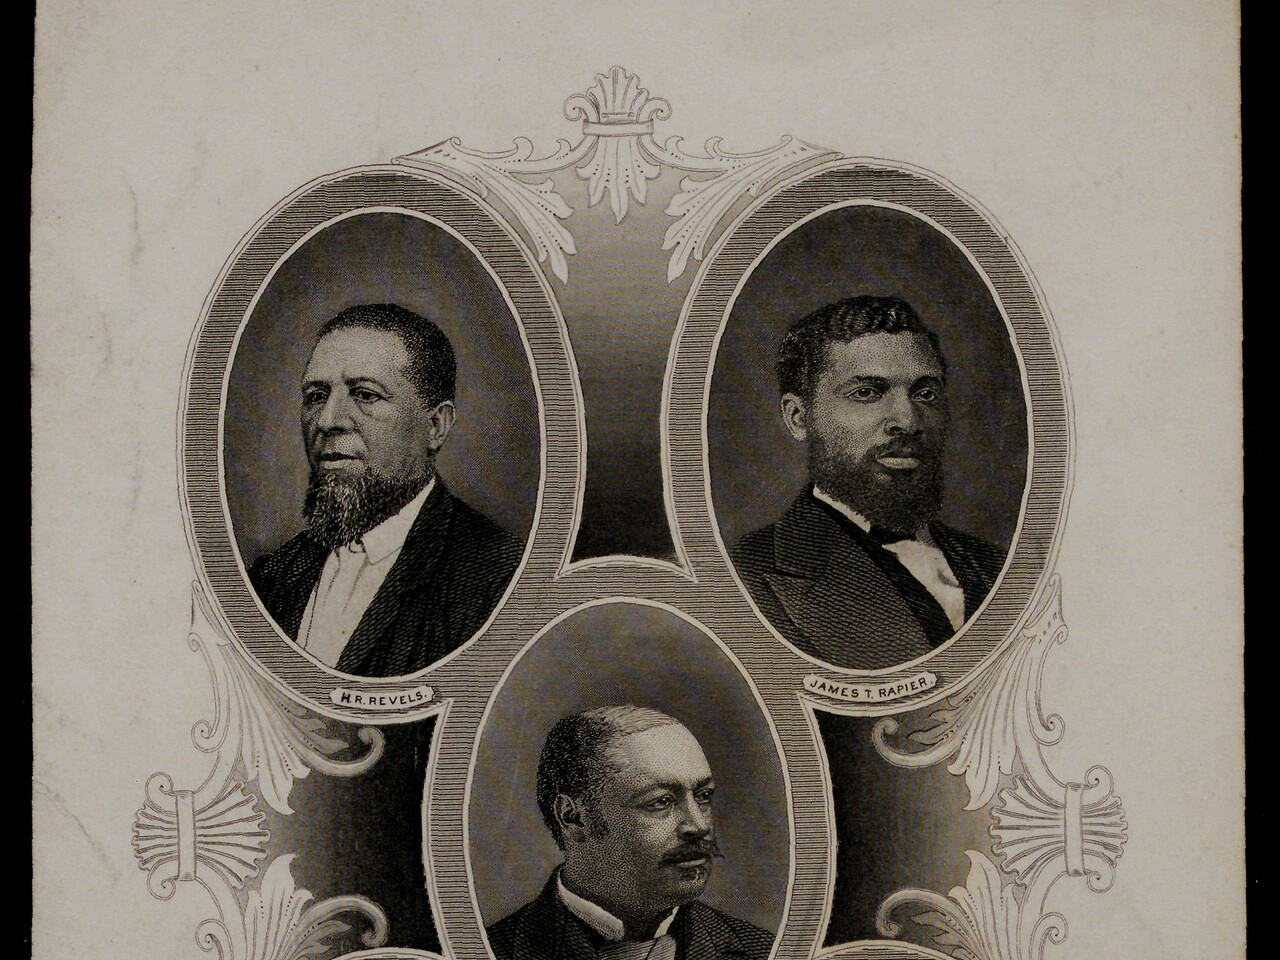 Print of five Black representatives during Reconstruction